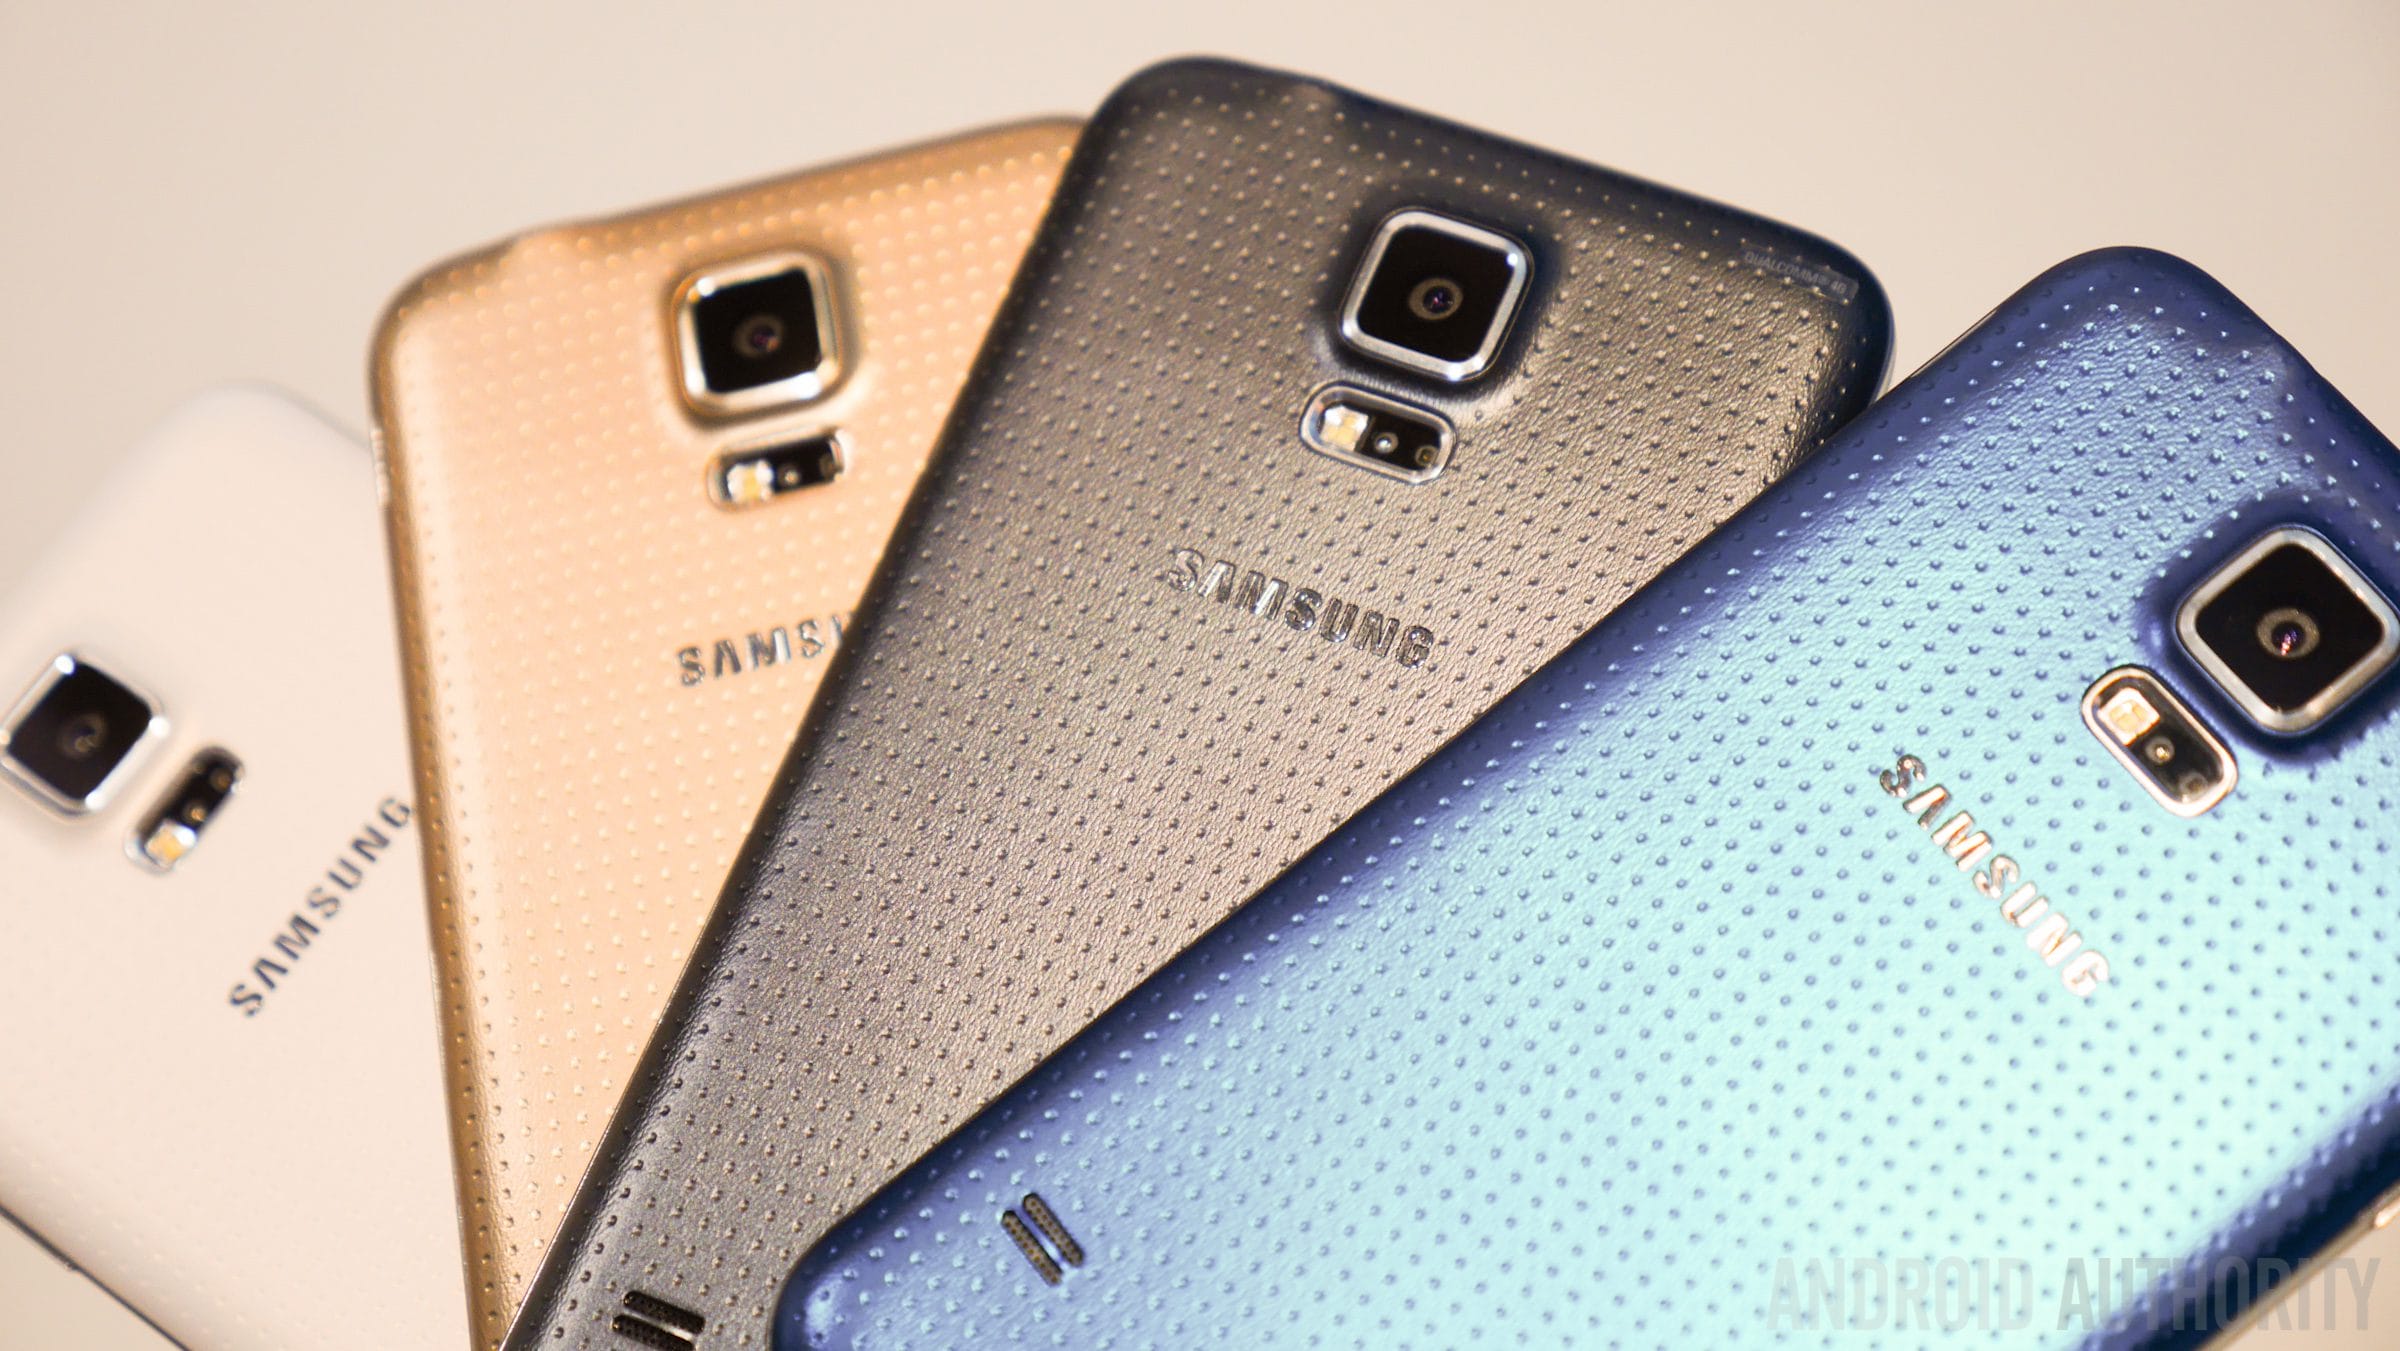 Samsung Galaxy S5 Design and Color